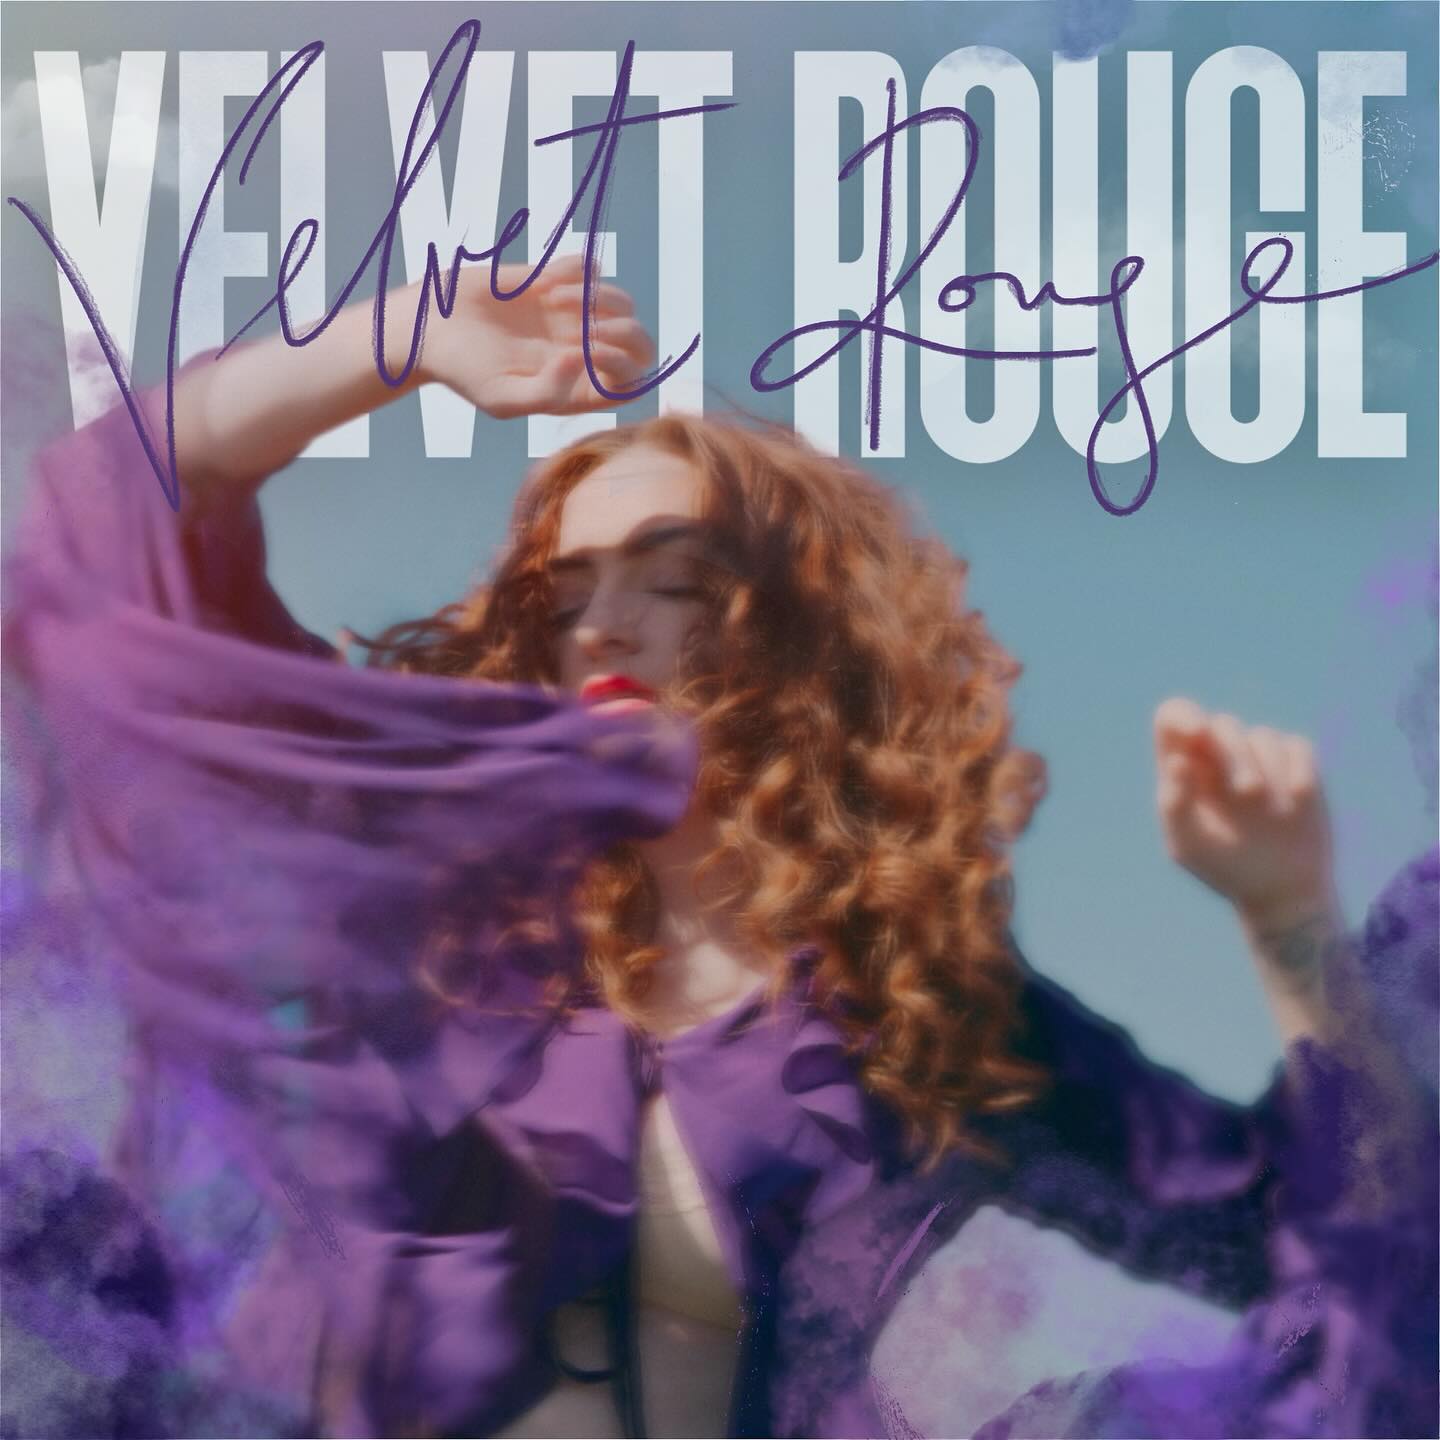 Gina Zo on the cover of her band Velvet Rouge's new album